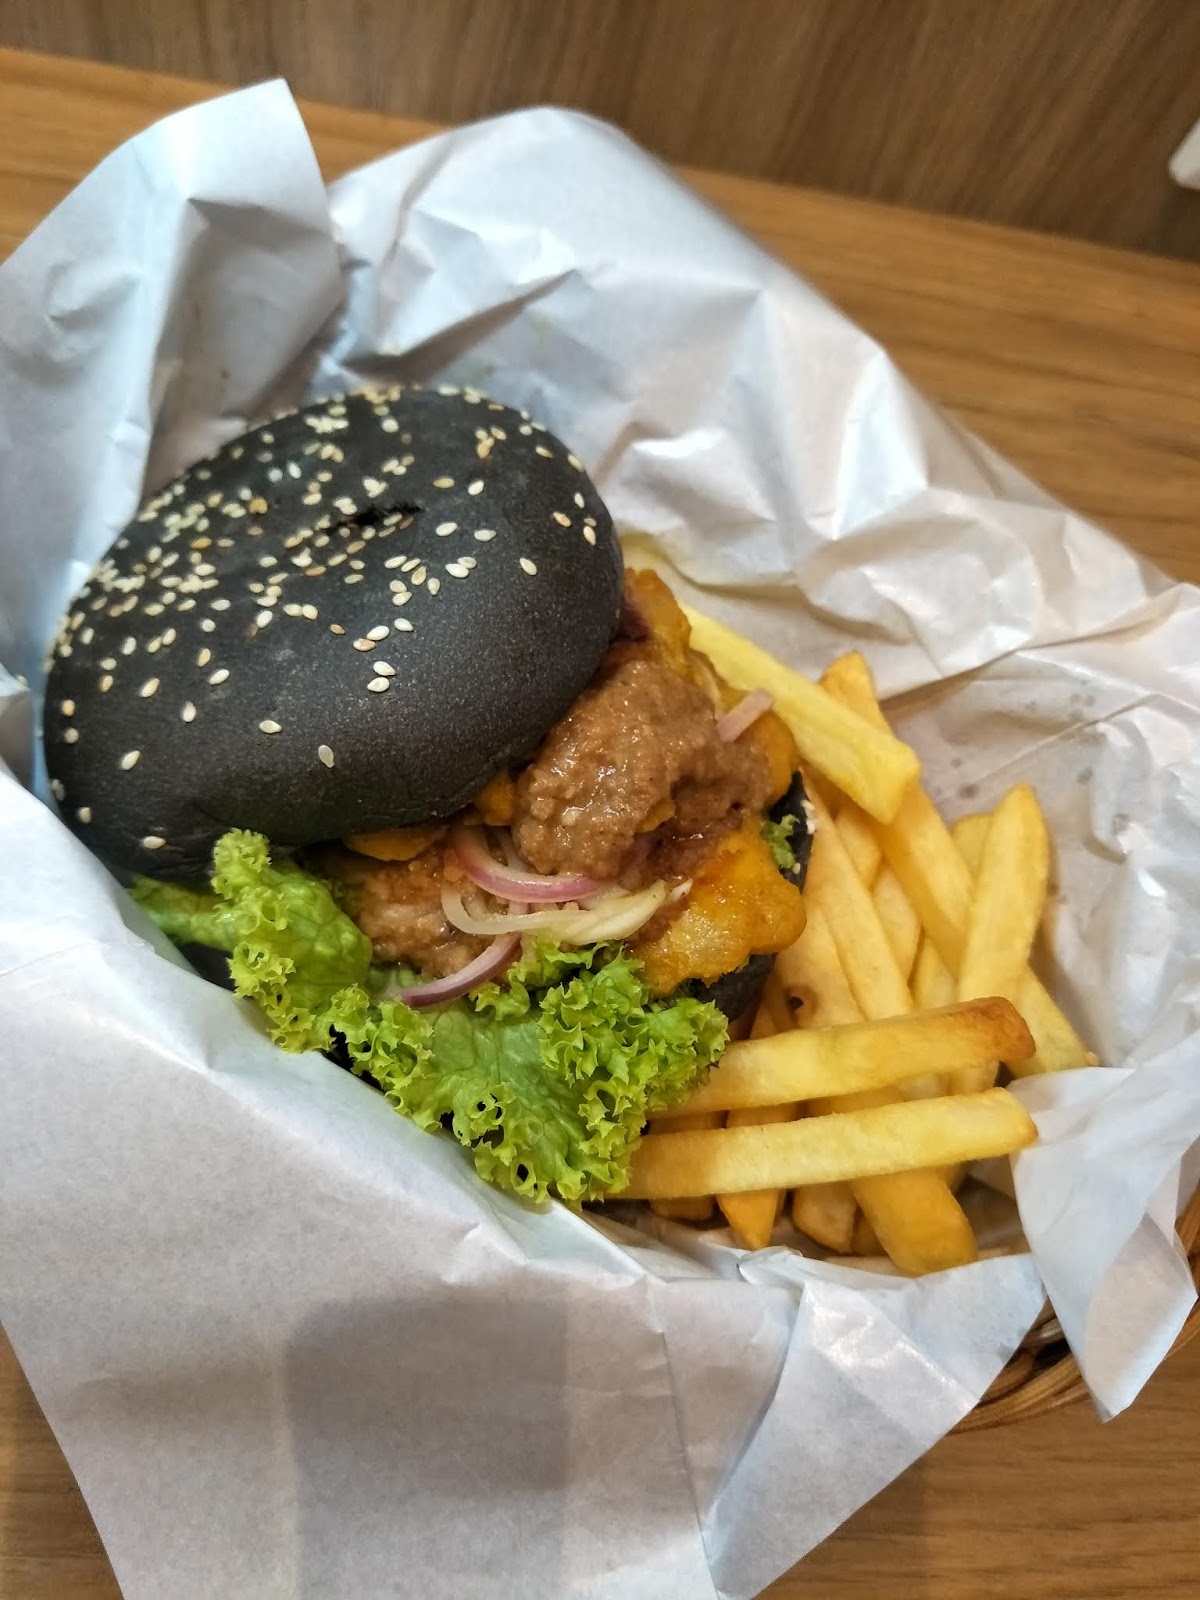 Kids love burger? Heads to Burgerlari as it offers Malaysian Taste